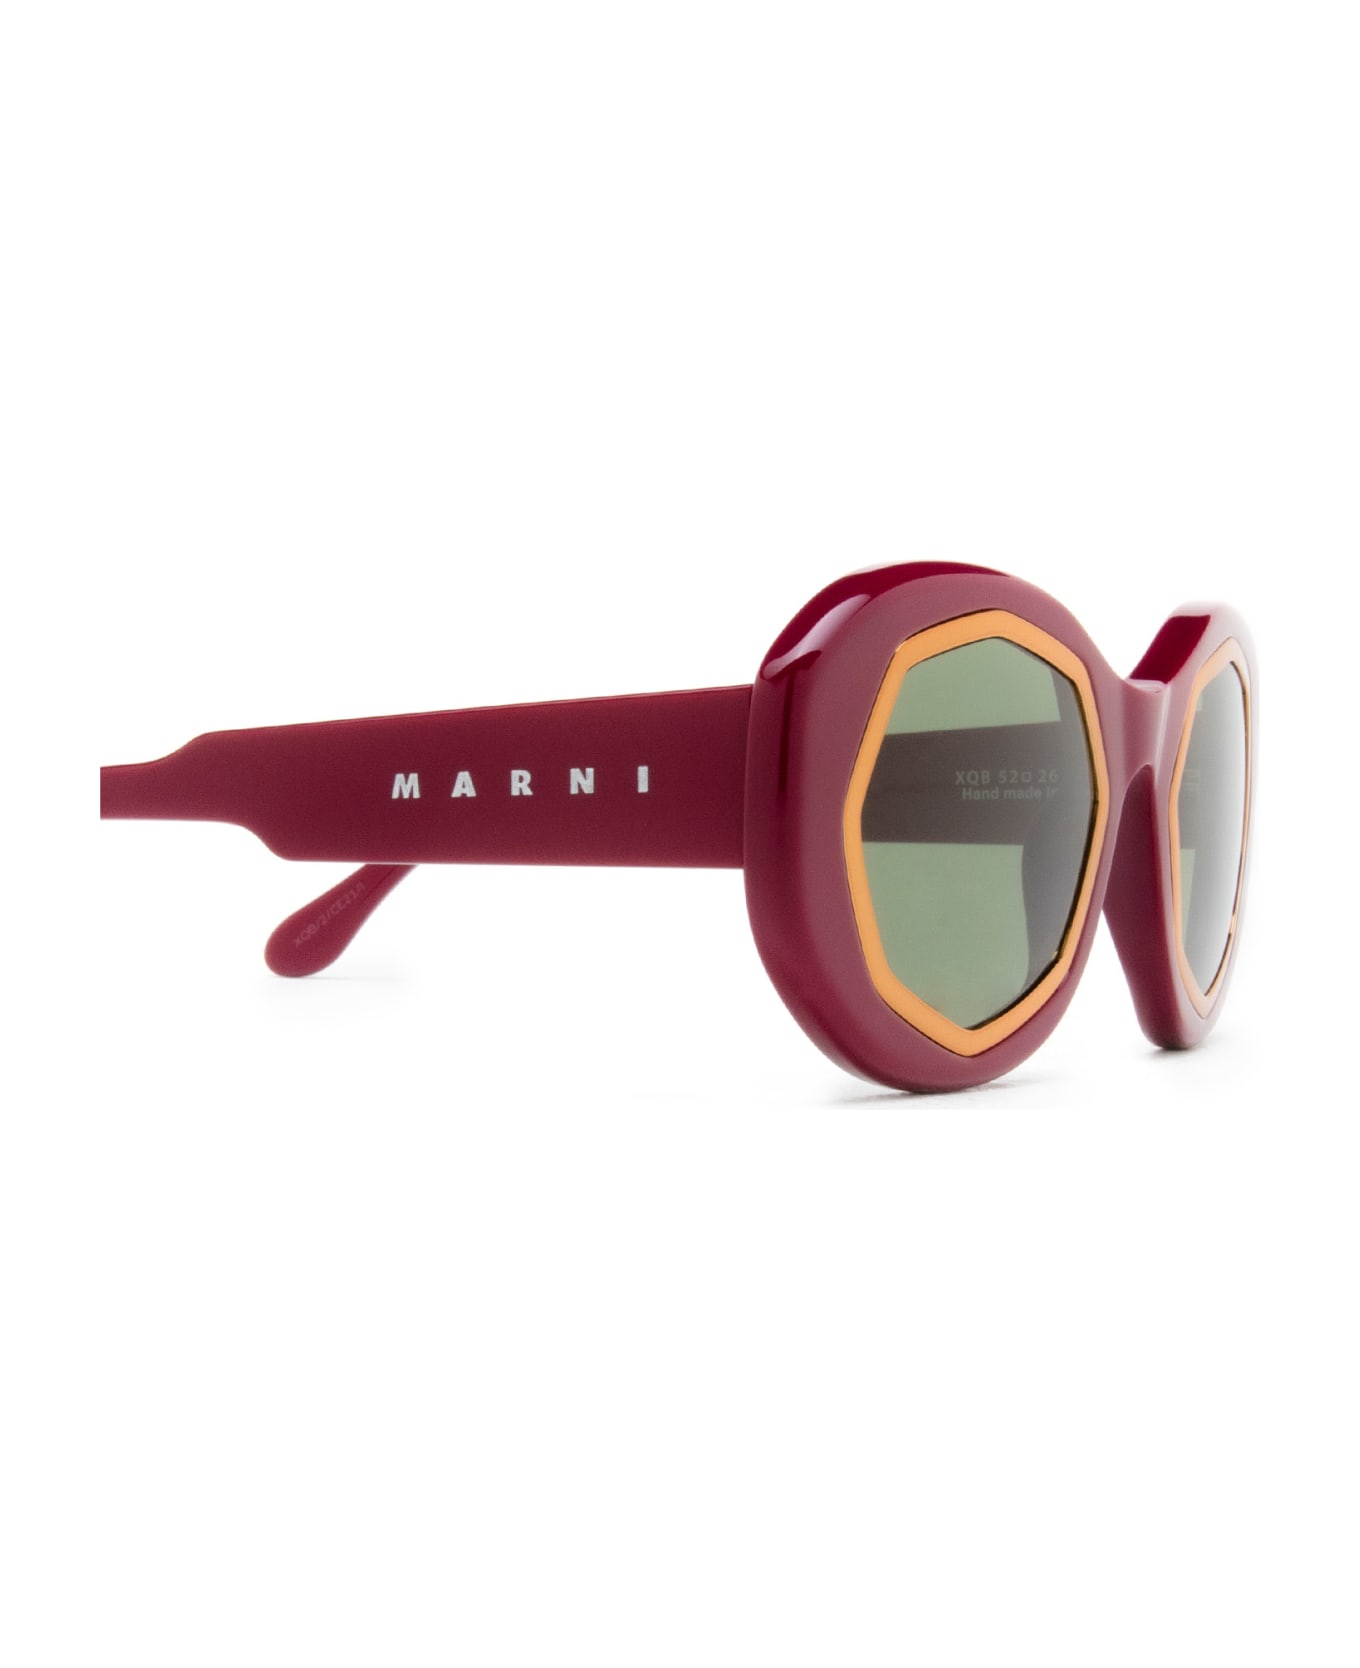 Marni Eyewear Mount Bromo Bordeaux Sunglasses - Bordeaux サングラス